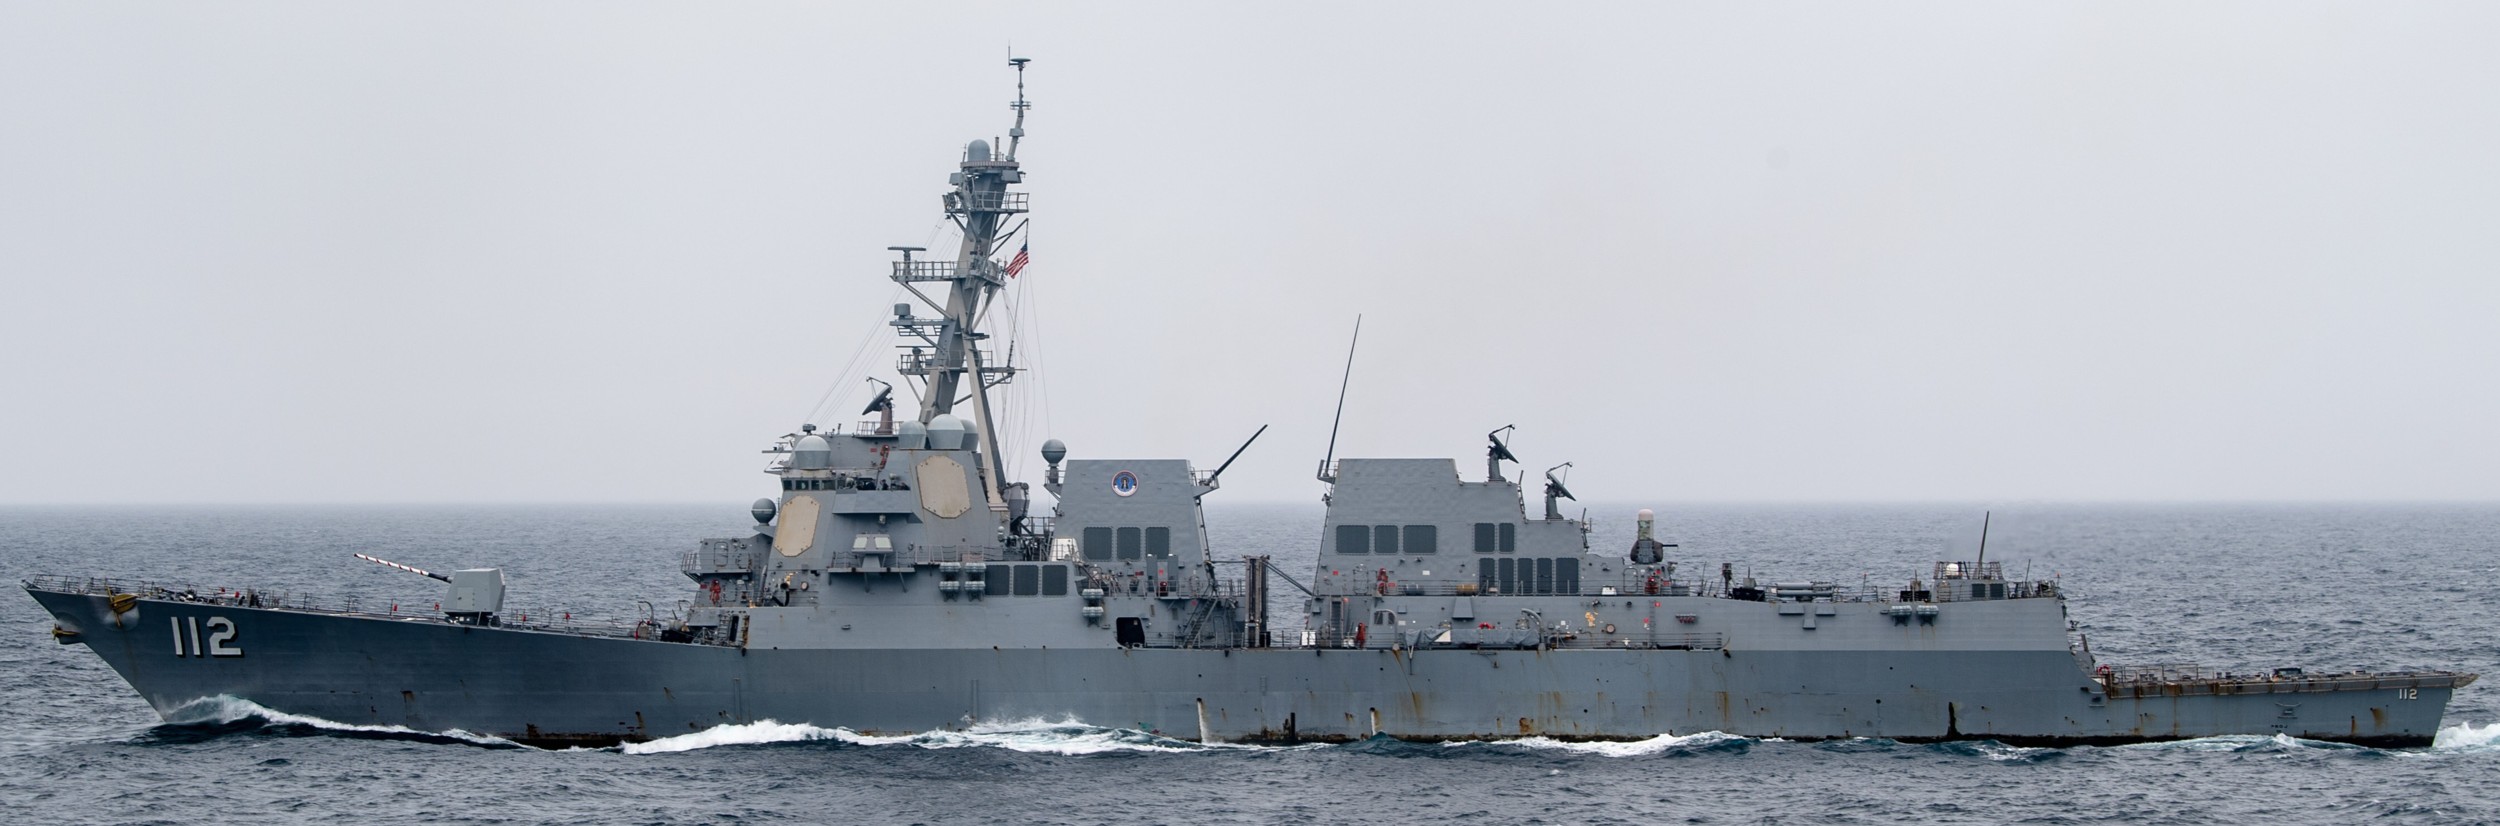 ddg-112 uss michael murphy arleigh burke class guided missile destroyer aegis us navy indian ocean 80